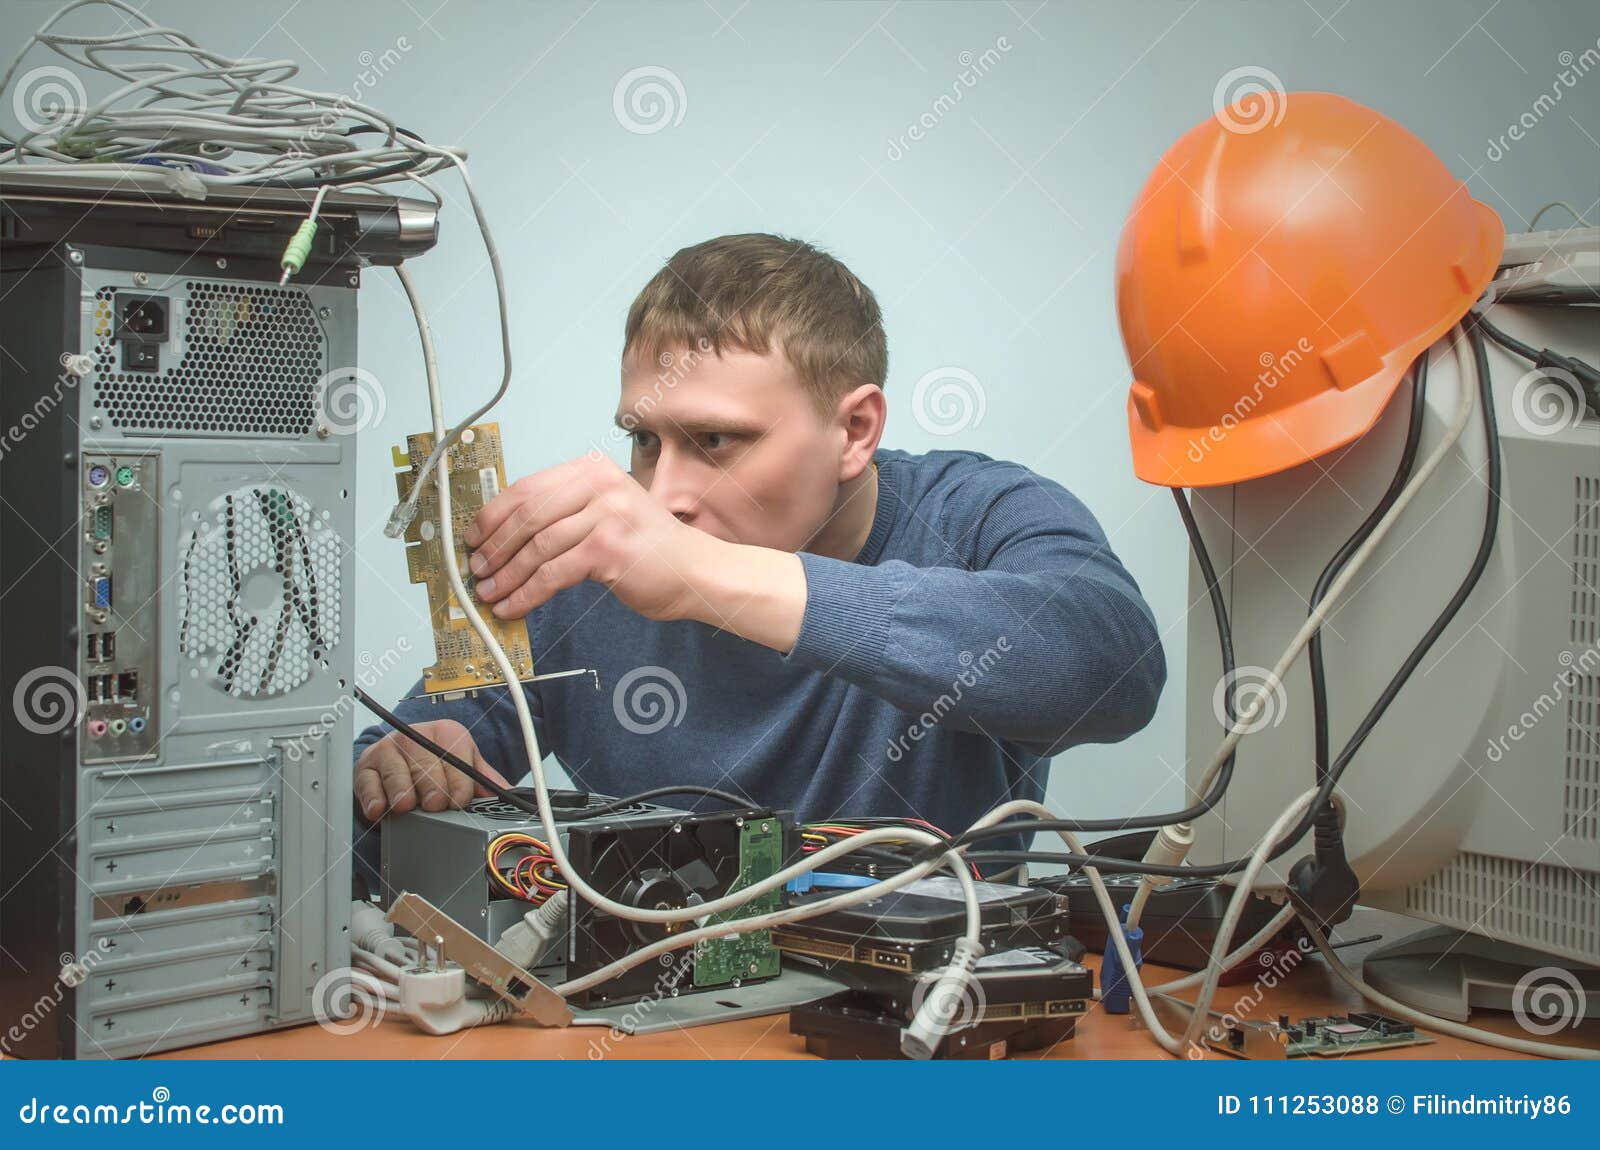 Computer maintenance and repair jobs